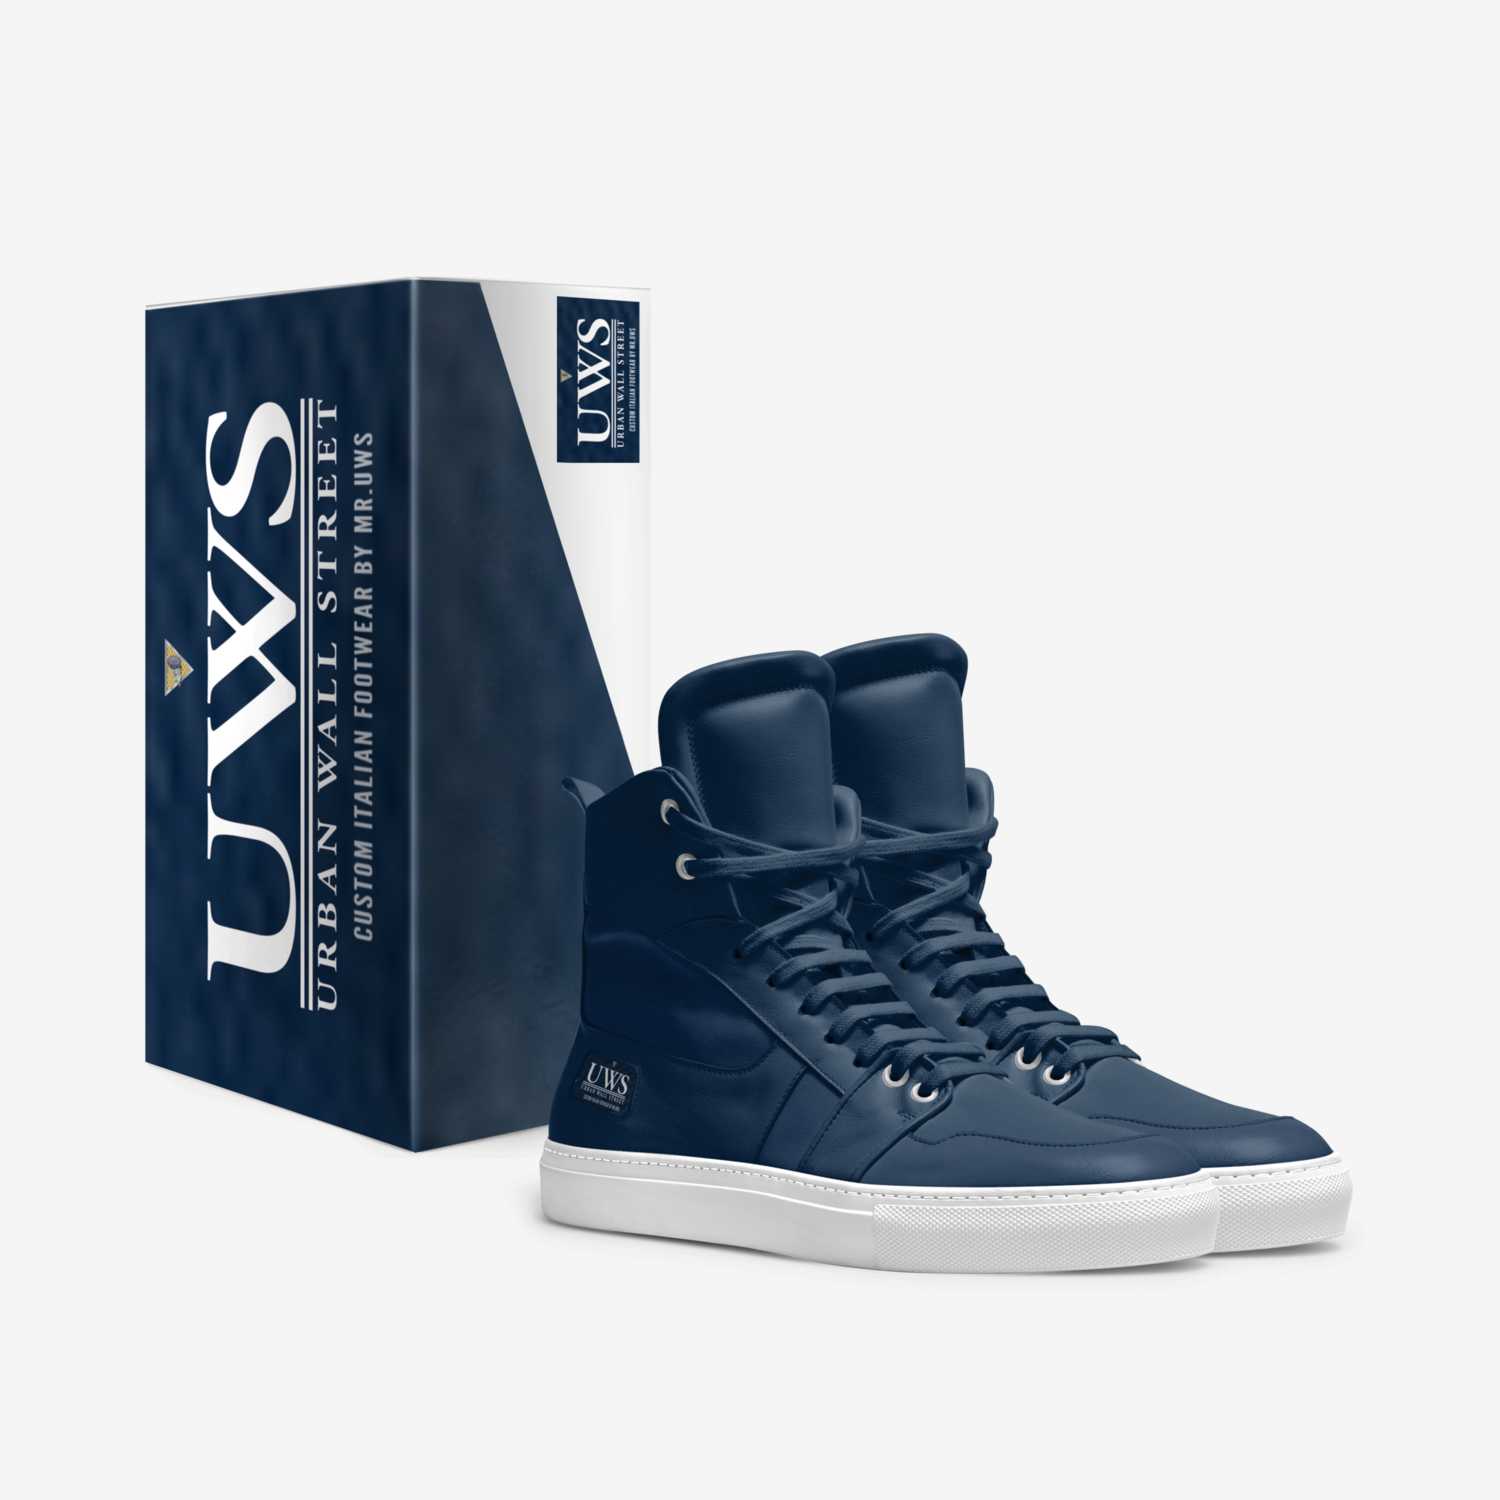 BKNY BLUES custom made in Italy shoes by Urbanwallstreet Earl | Box view